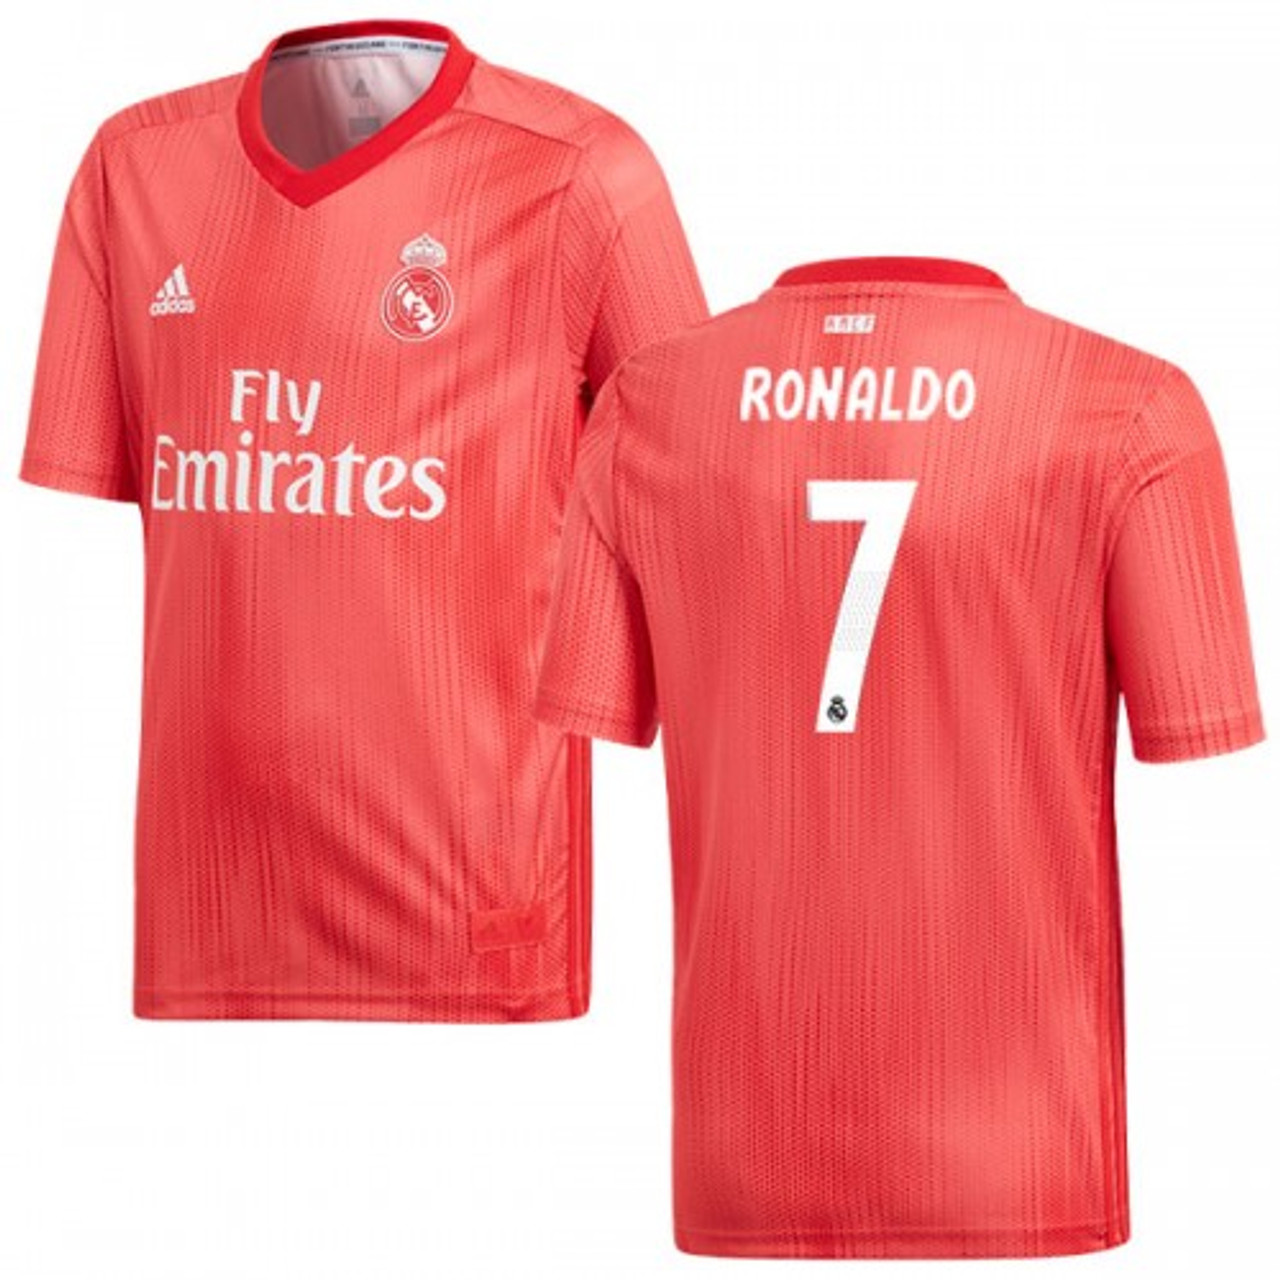 ronaldo red jersey